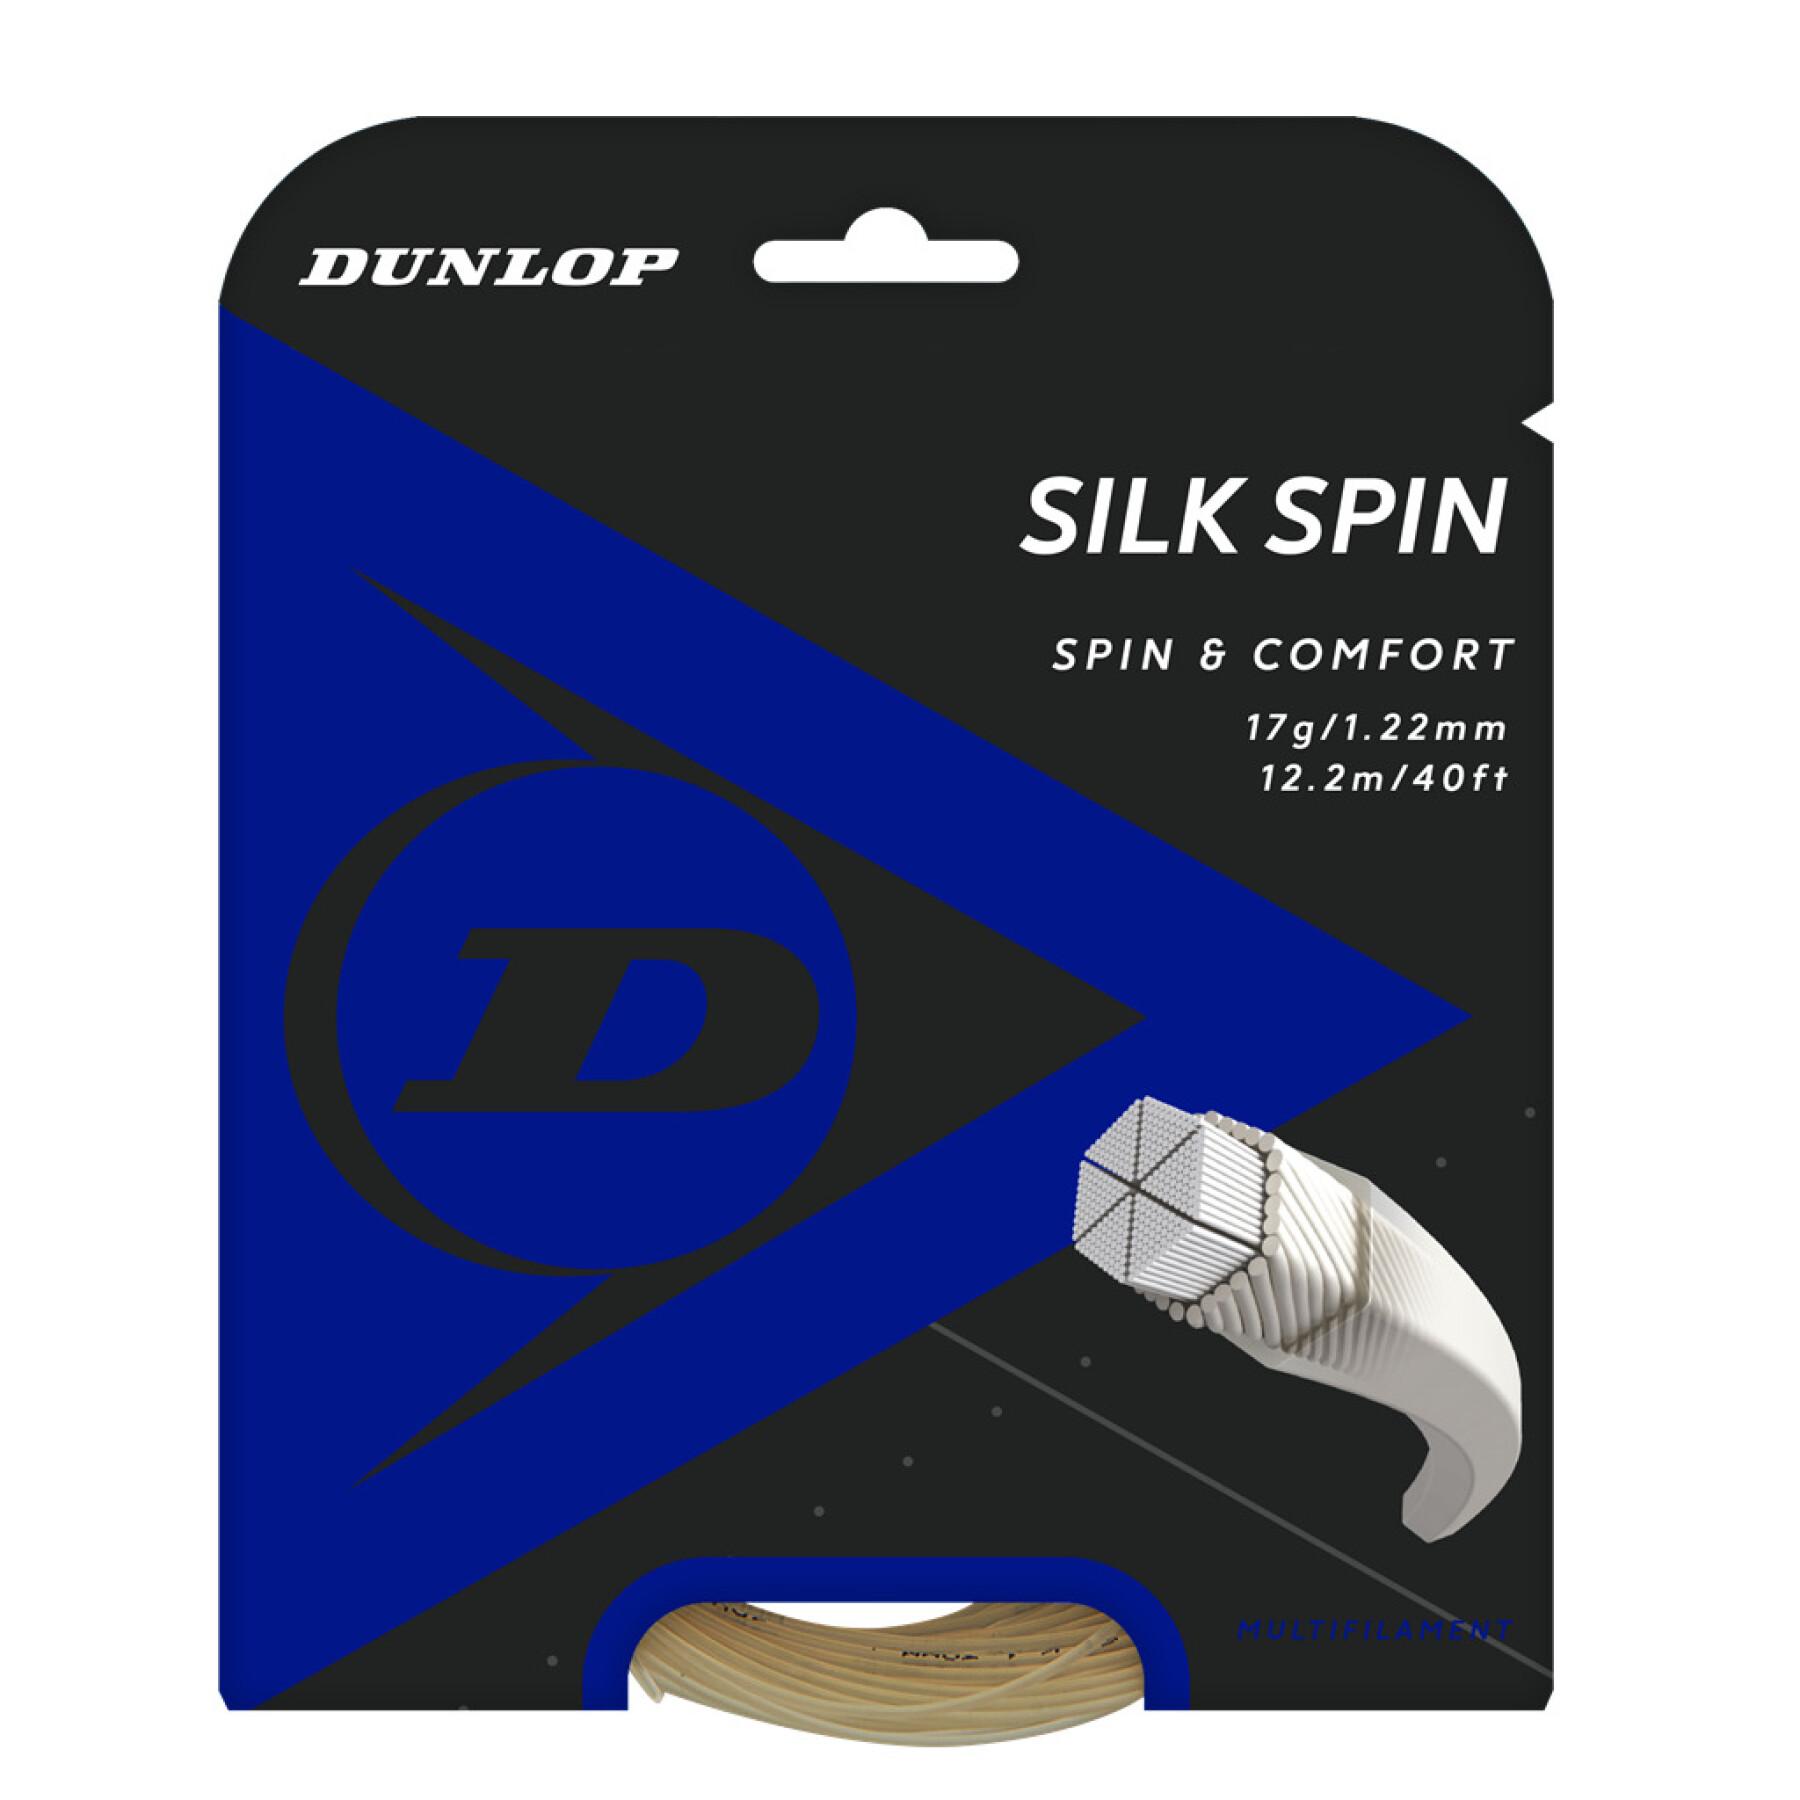 Cordage Dunlop silk spin